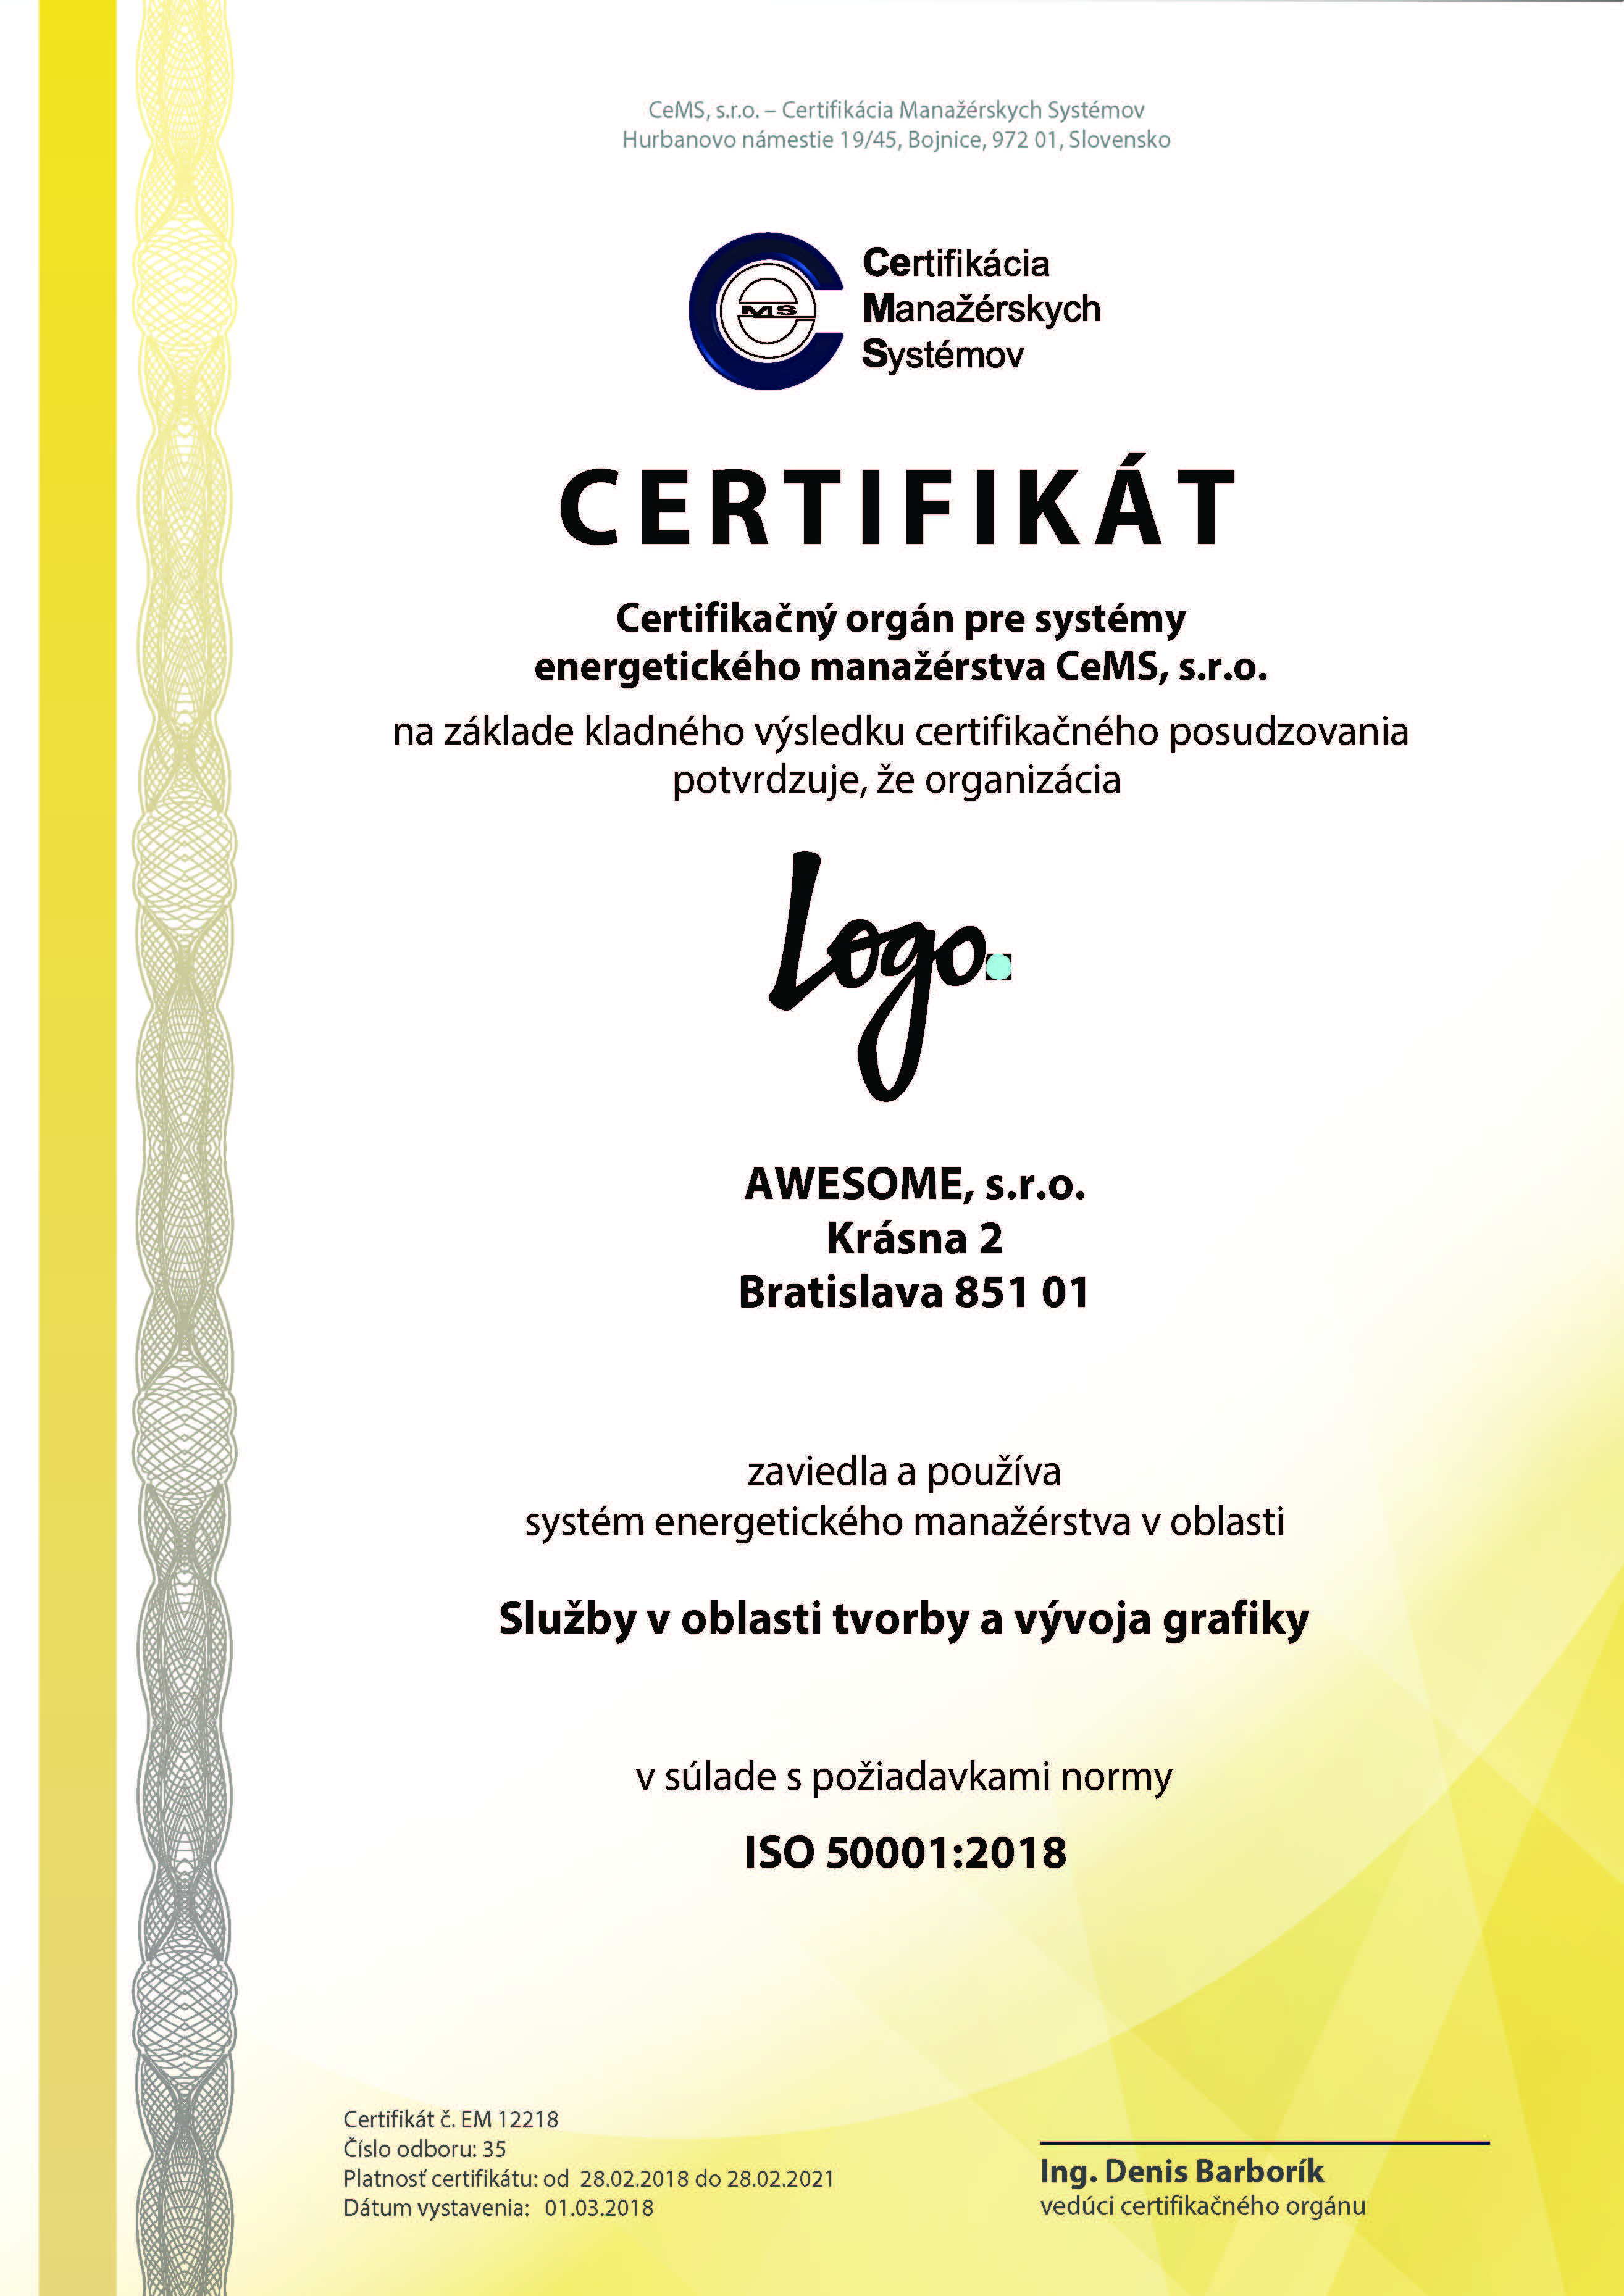 vzor certifikátu ISO 50001 od CeMS